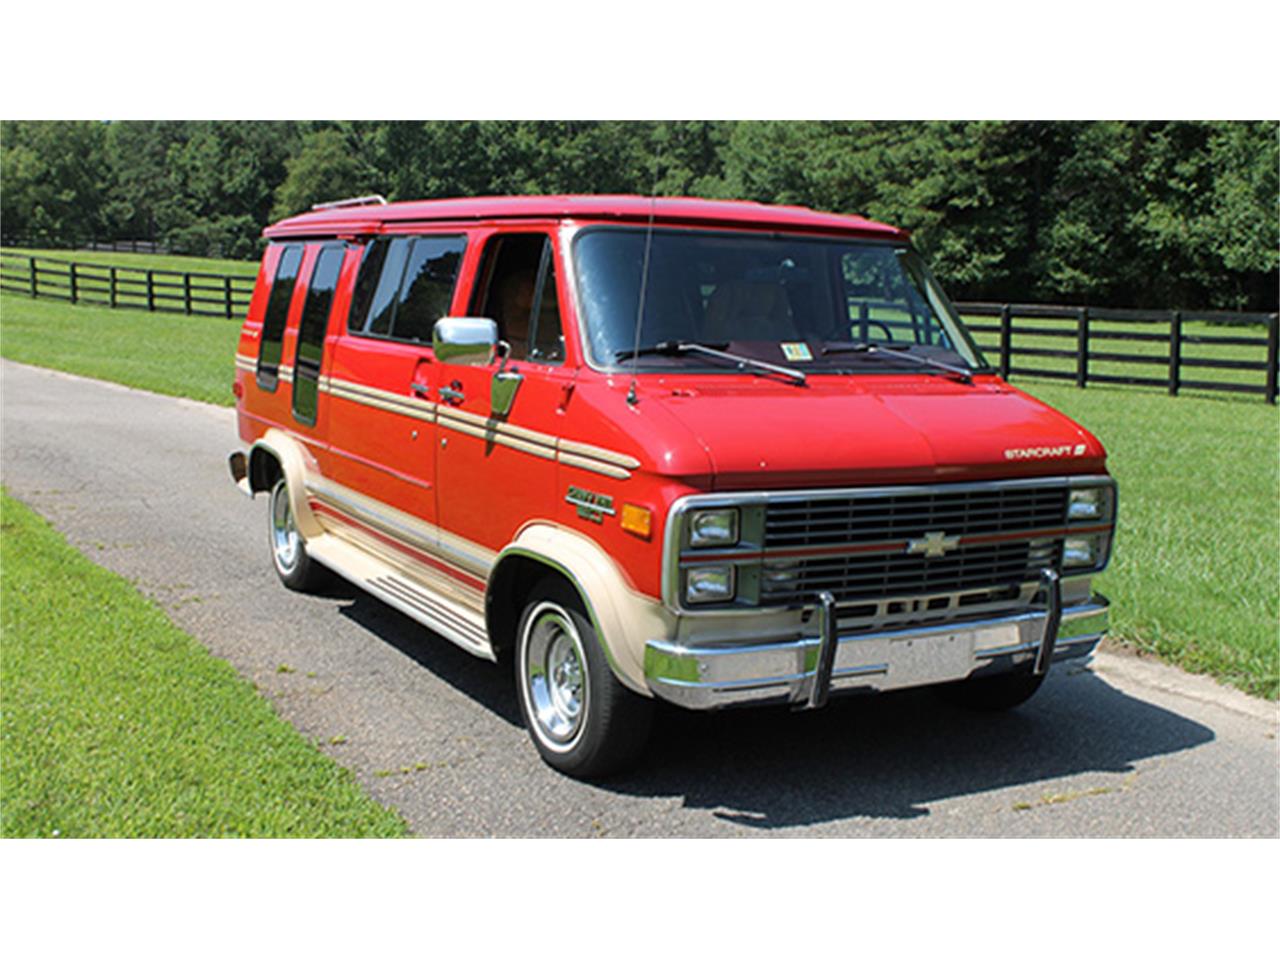 starcraft vans for sale